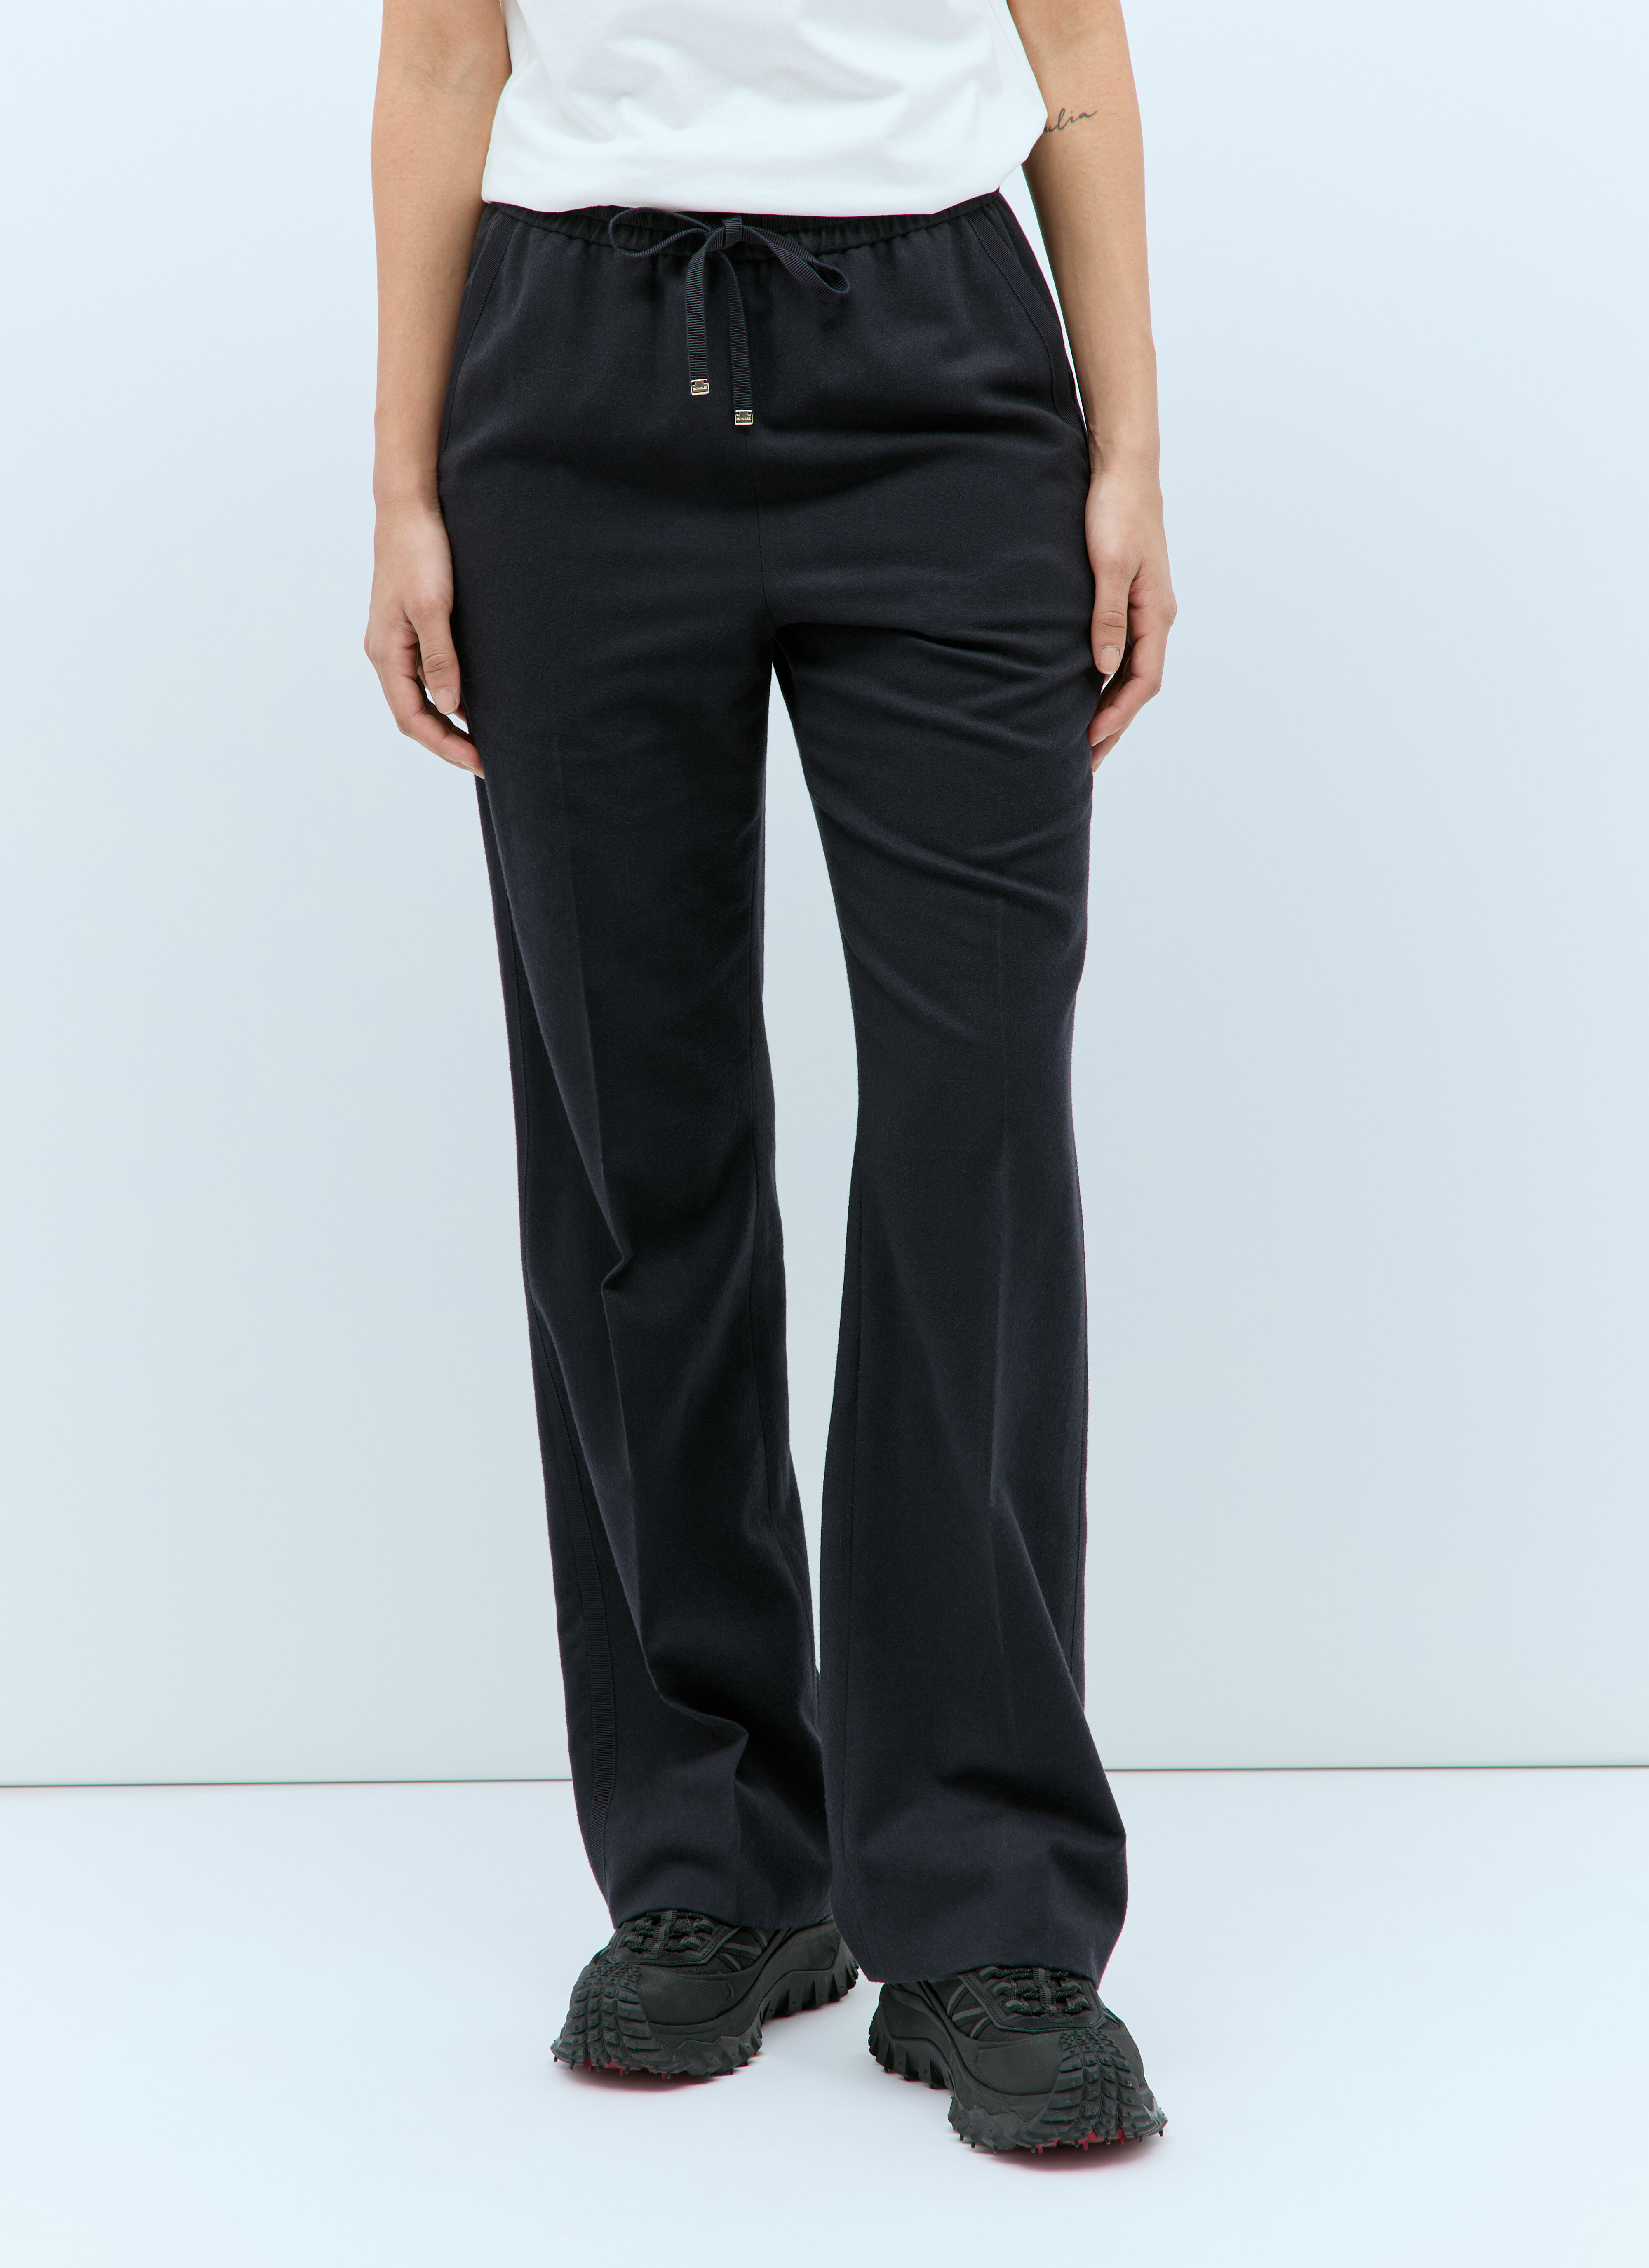 Jean Paul Gaultier Wool-Blend Drawstring Trackpants Black jpg0258007